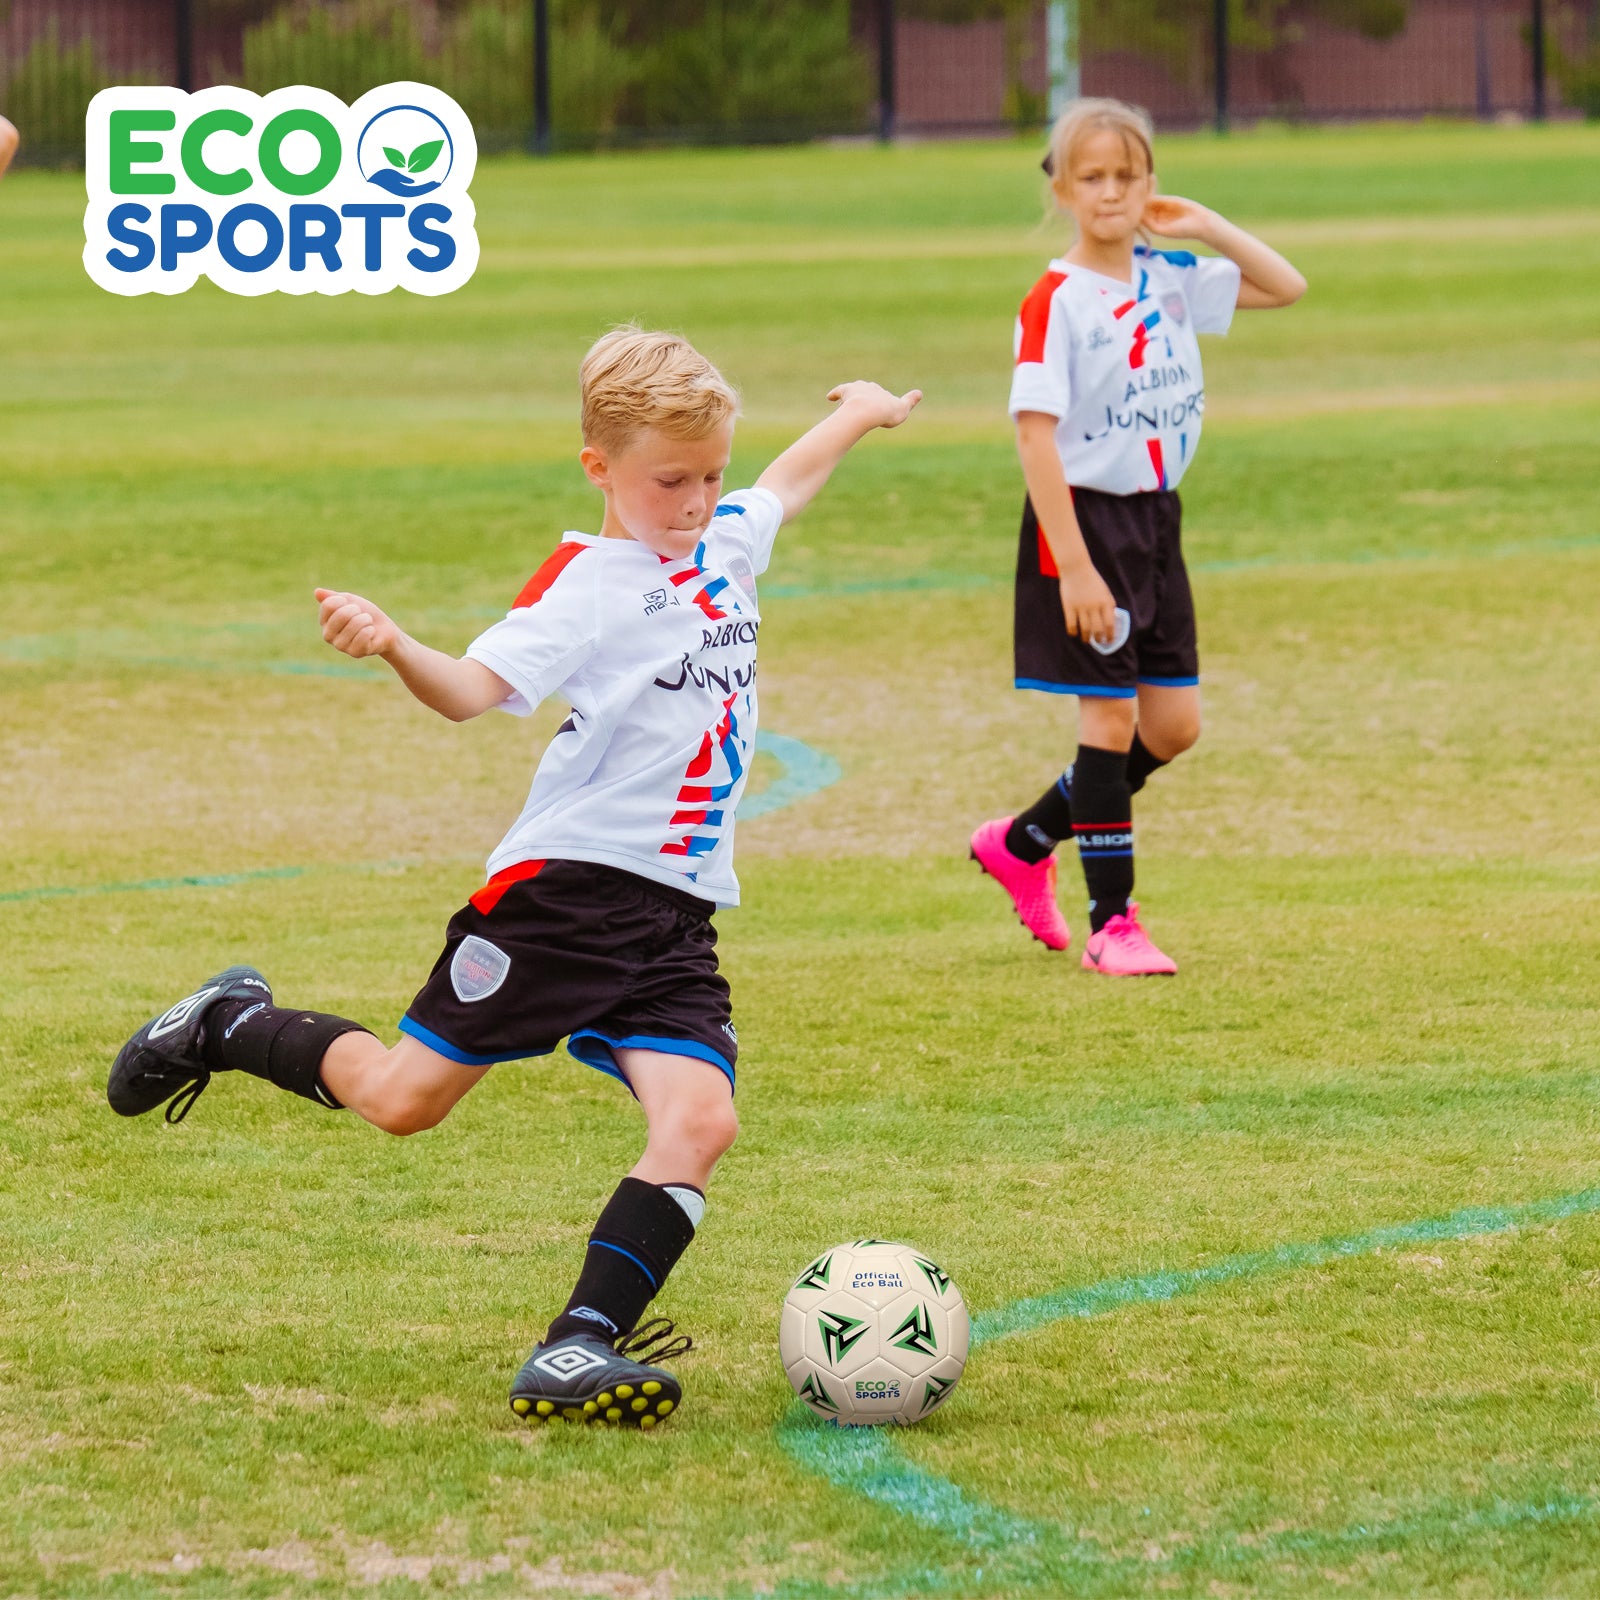 Size 3 Soccer Balls - Eco Small Soccer Balls For Kids